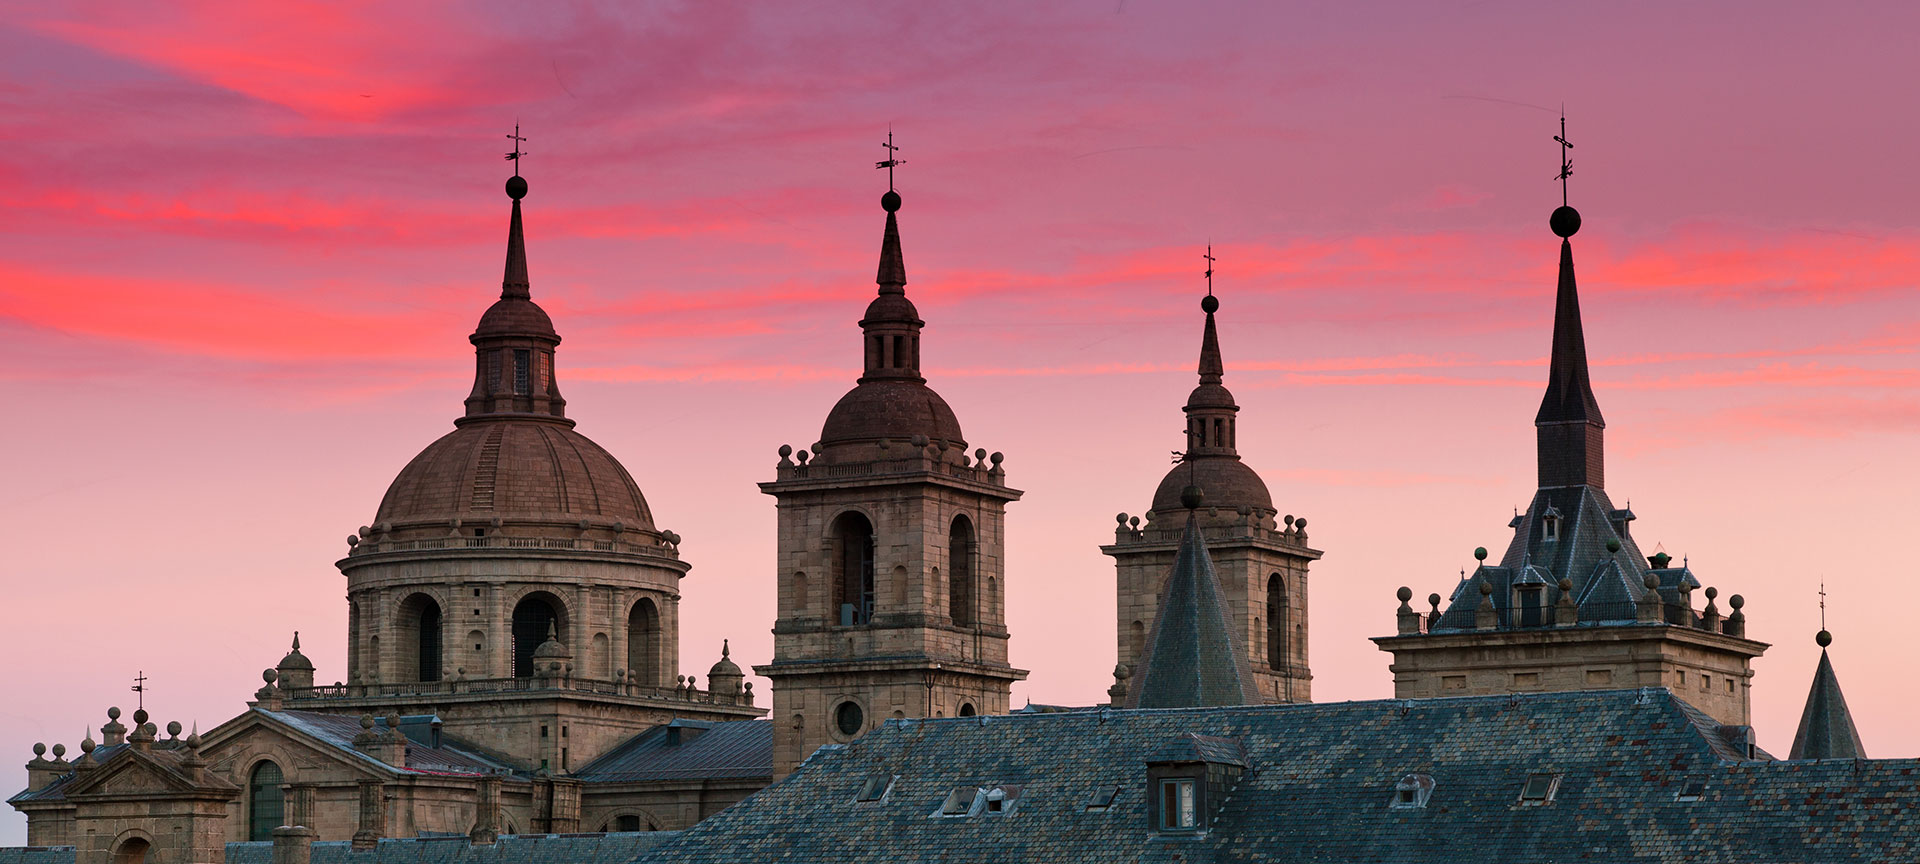  Views of the roof tiles of El Escorial Monastery at sunset in San Lorenzo de El Escorial, Madrid